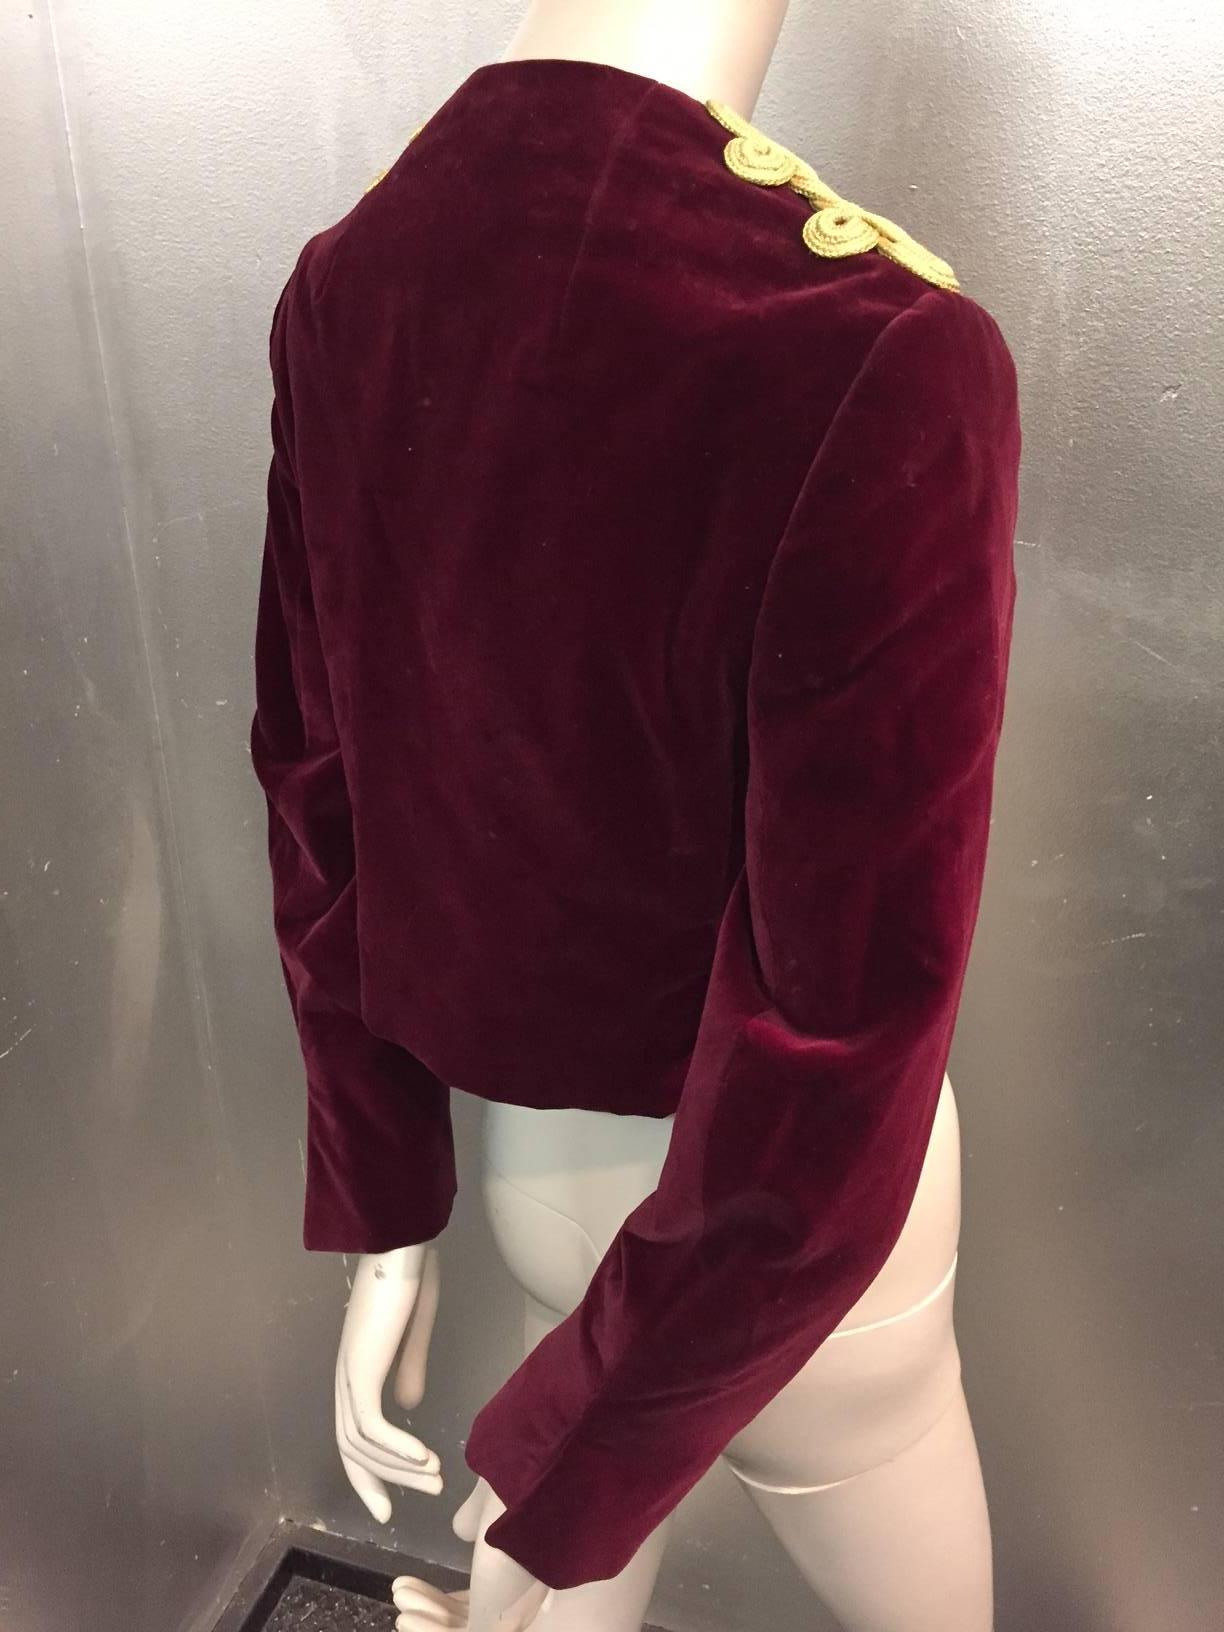 Women's 1960s Bill Blass Burgundy Velvet Jacket w Gold Braid Epaulets and Closure